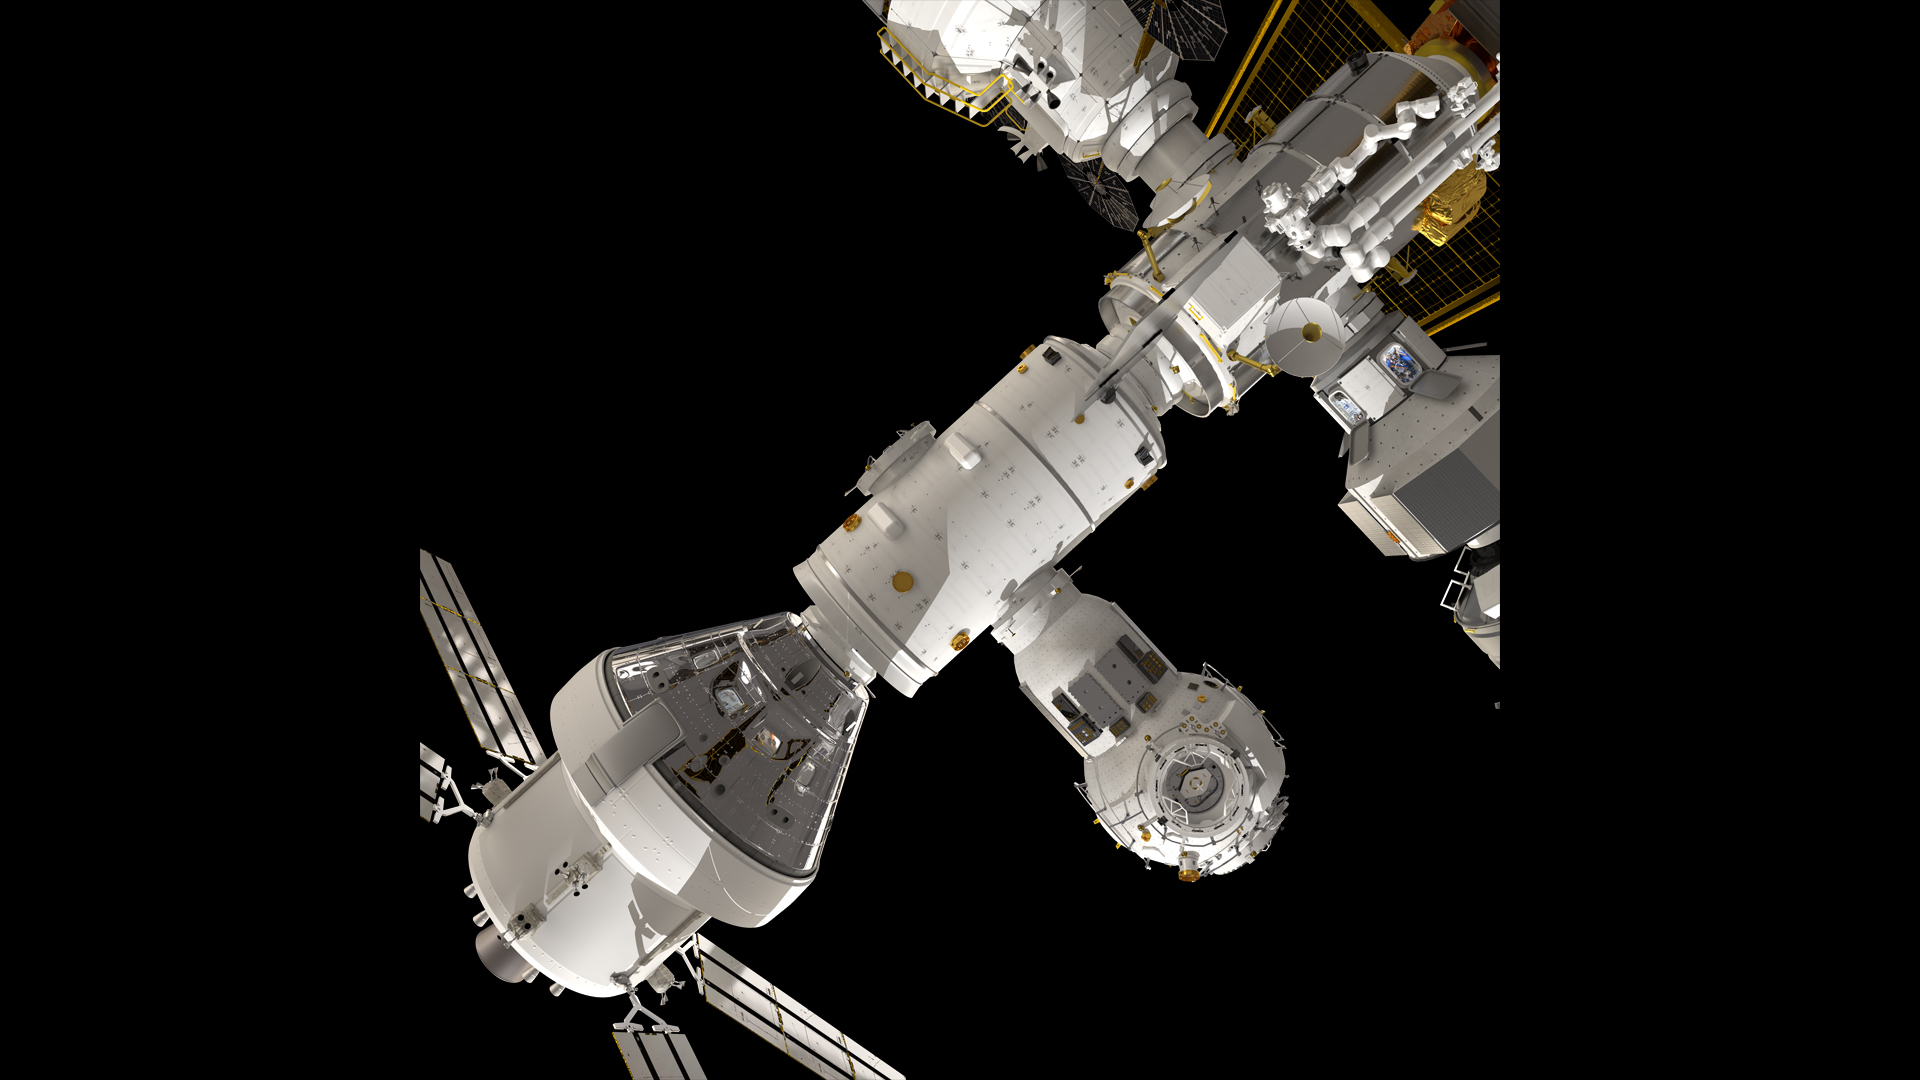 A visual representation of the crew segment of the Lunar Gateway station.